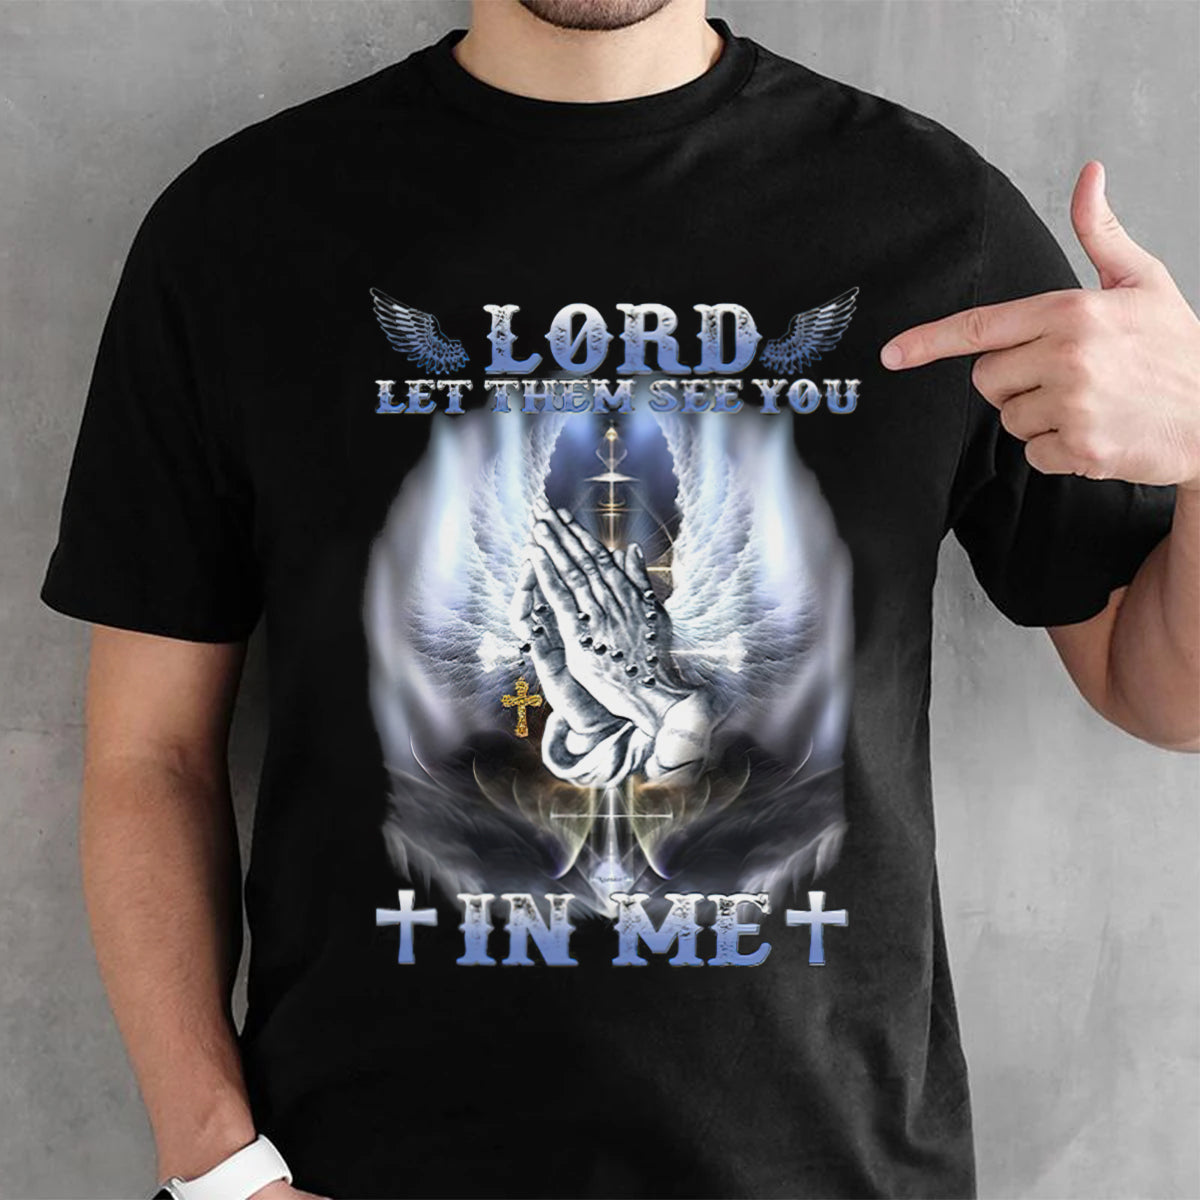 Lord Let Them See You In Me T Shirt - Bible Verse Shirt - Cross Shirt - Hand And Dove Wings Shirt - Scripture Shirt - Christian Shirt - Ciaocustom